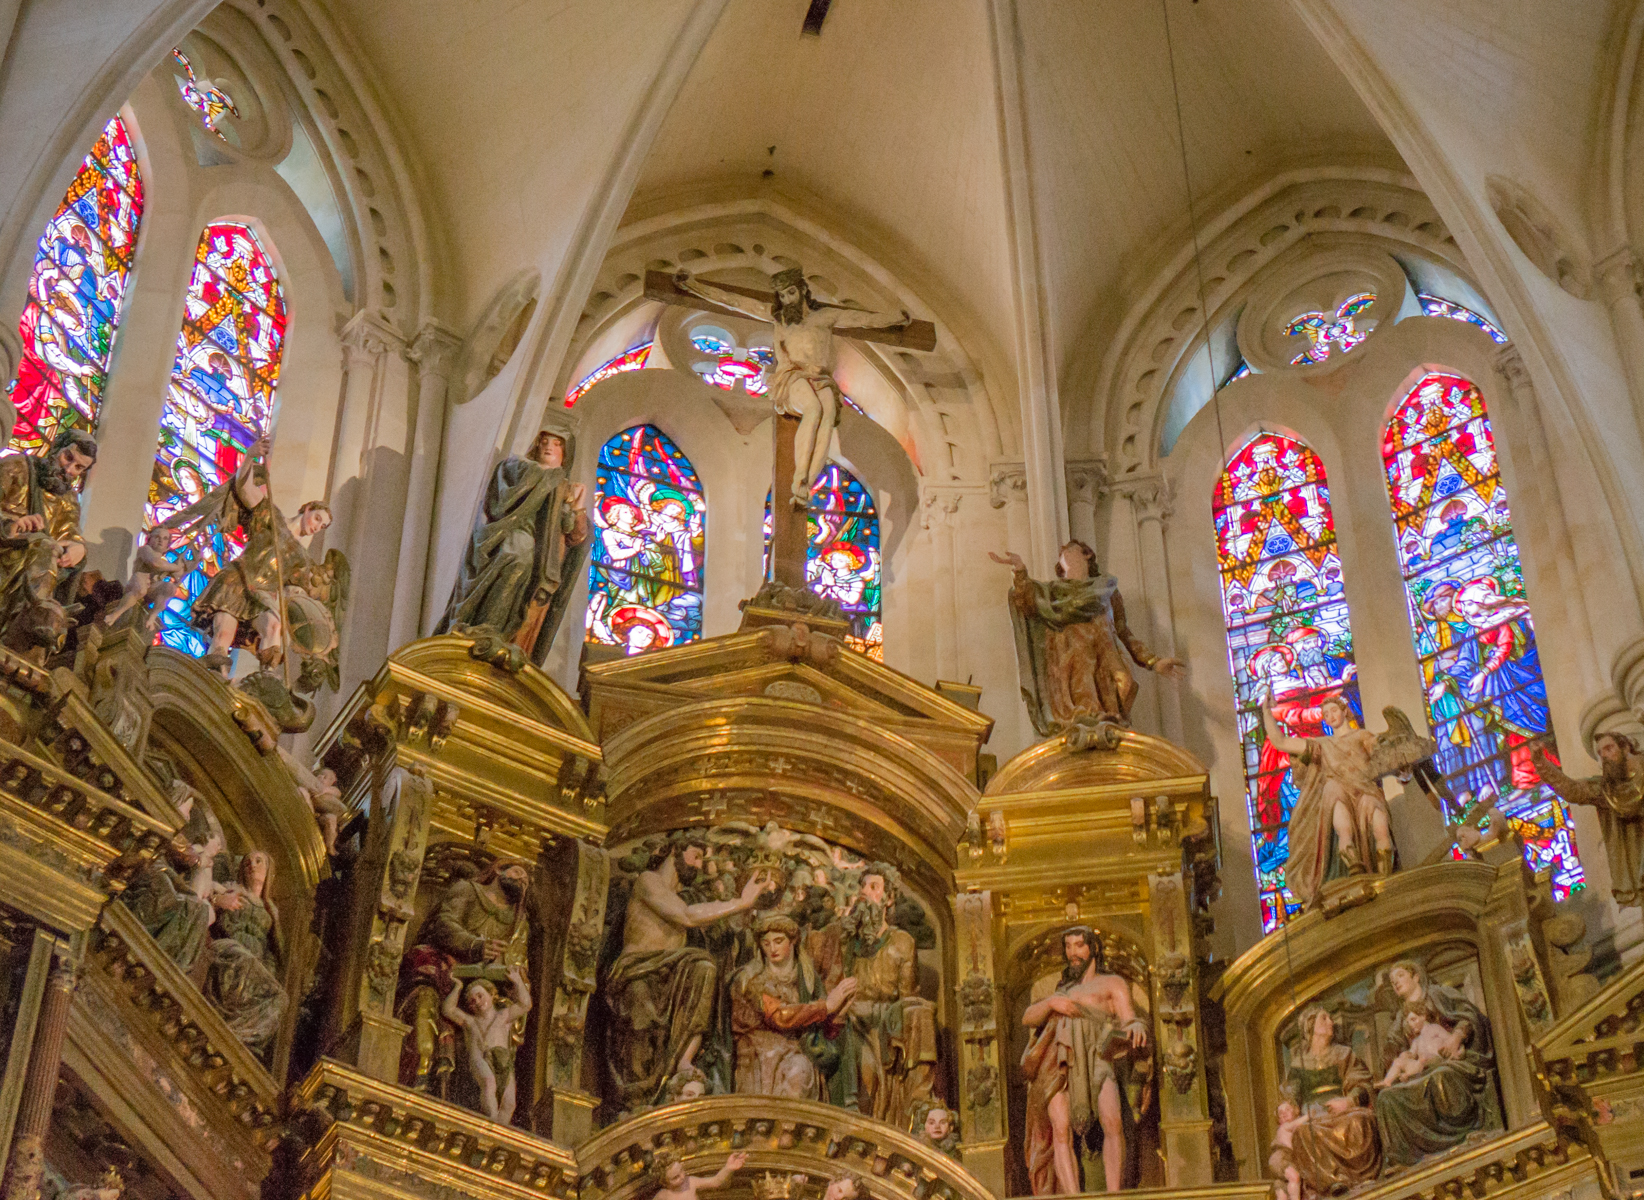 Main altar and surrounding stained glass windows at Catedral de Santa Maria de Burgos, Burgos, Spain | Photo by Mike Hudak